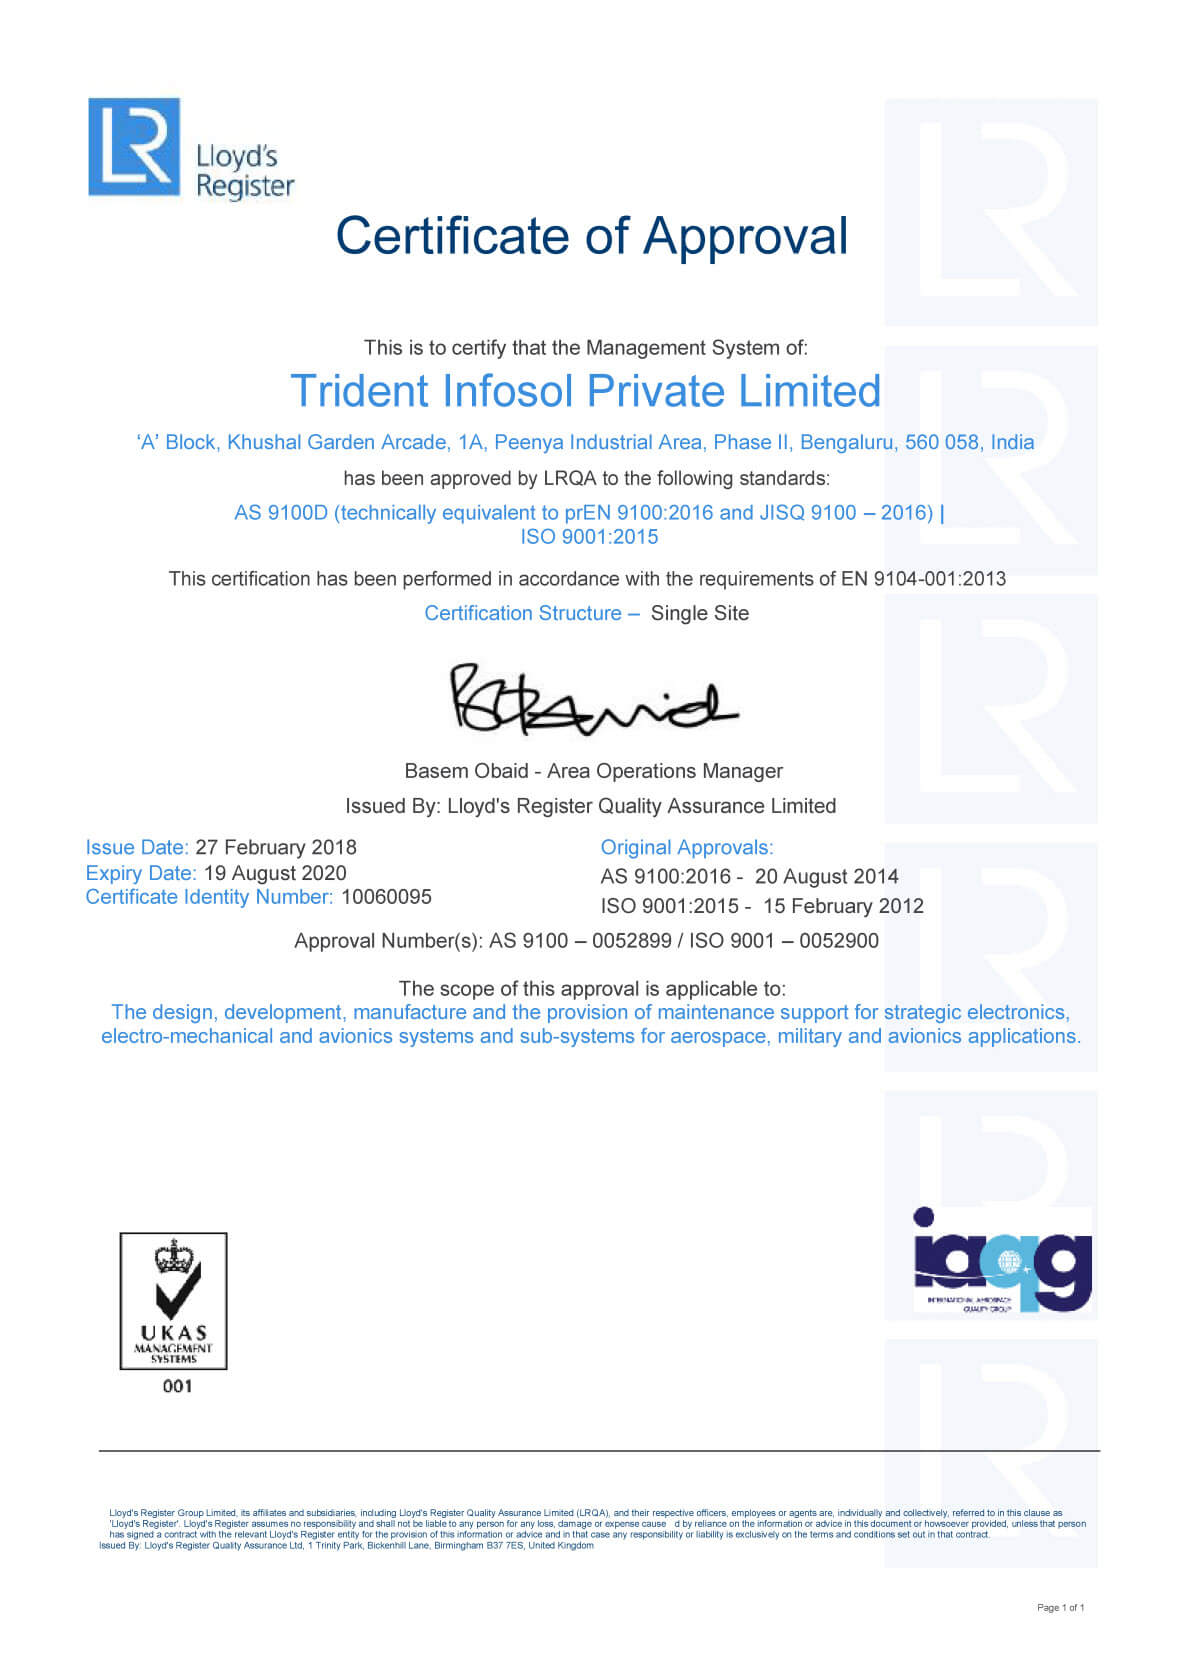 Trident Infosol Certificate